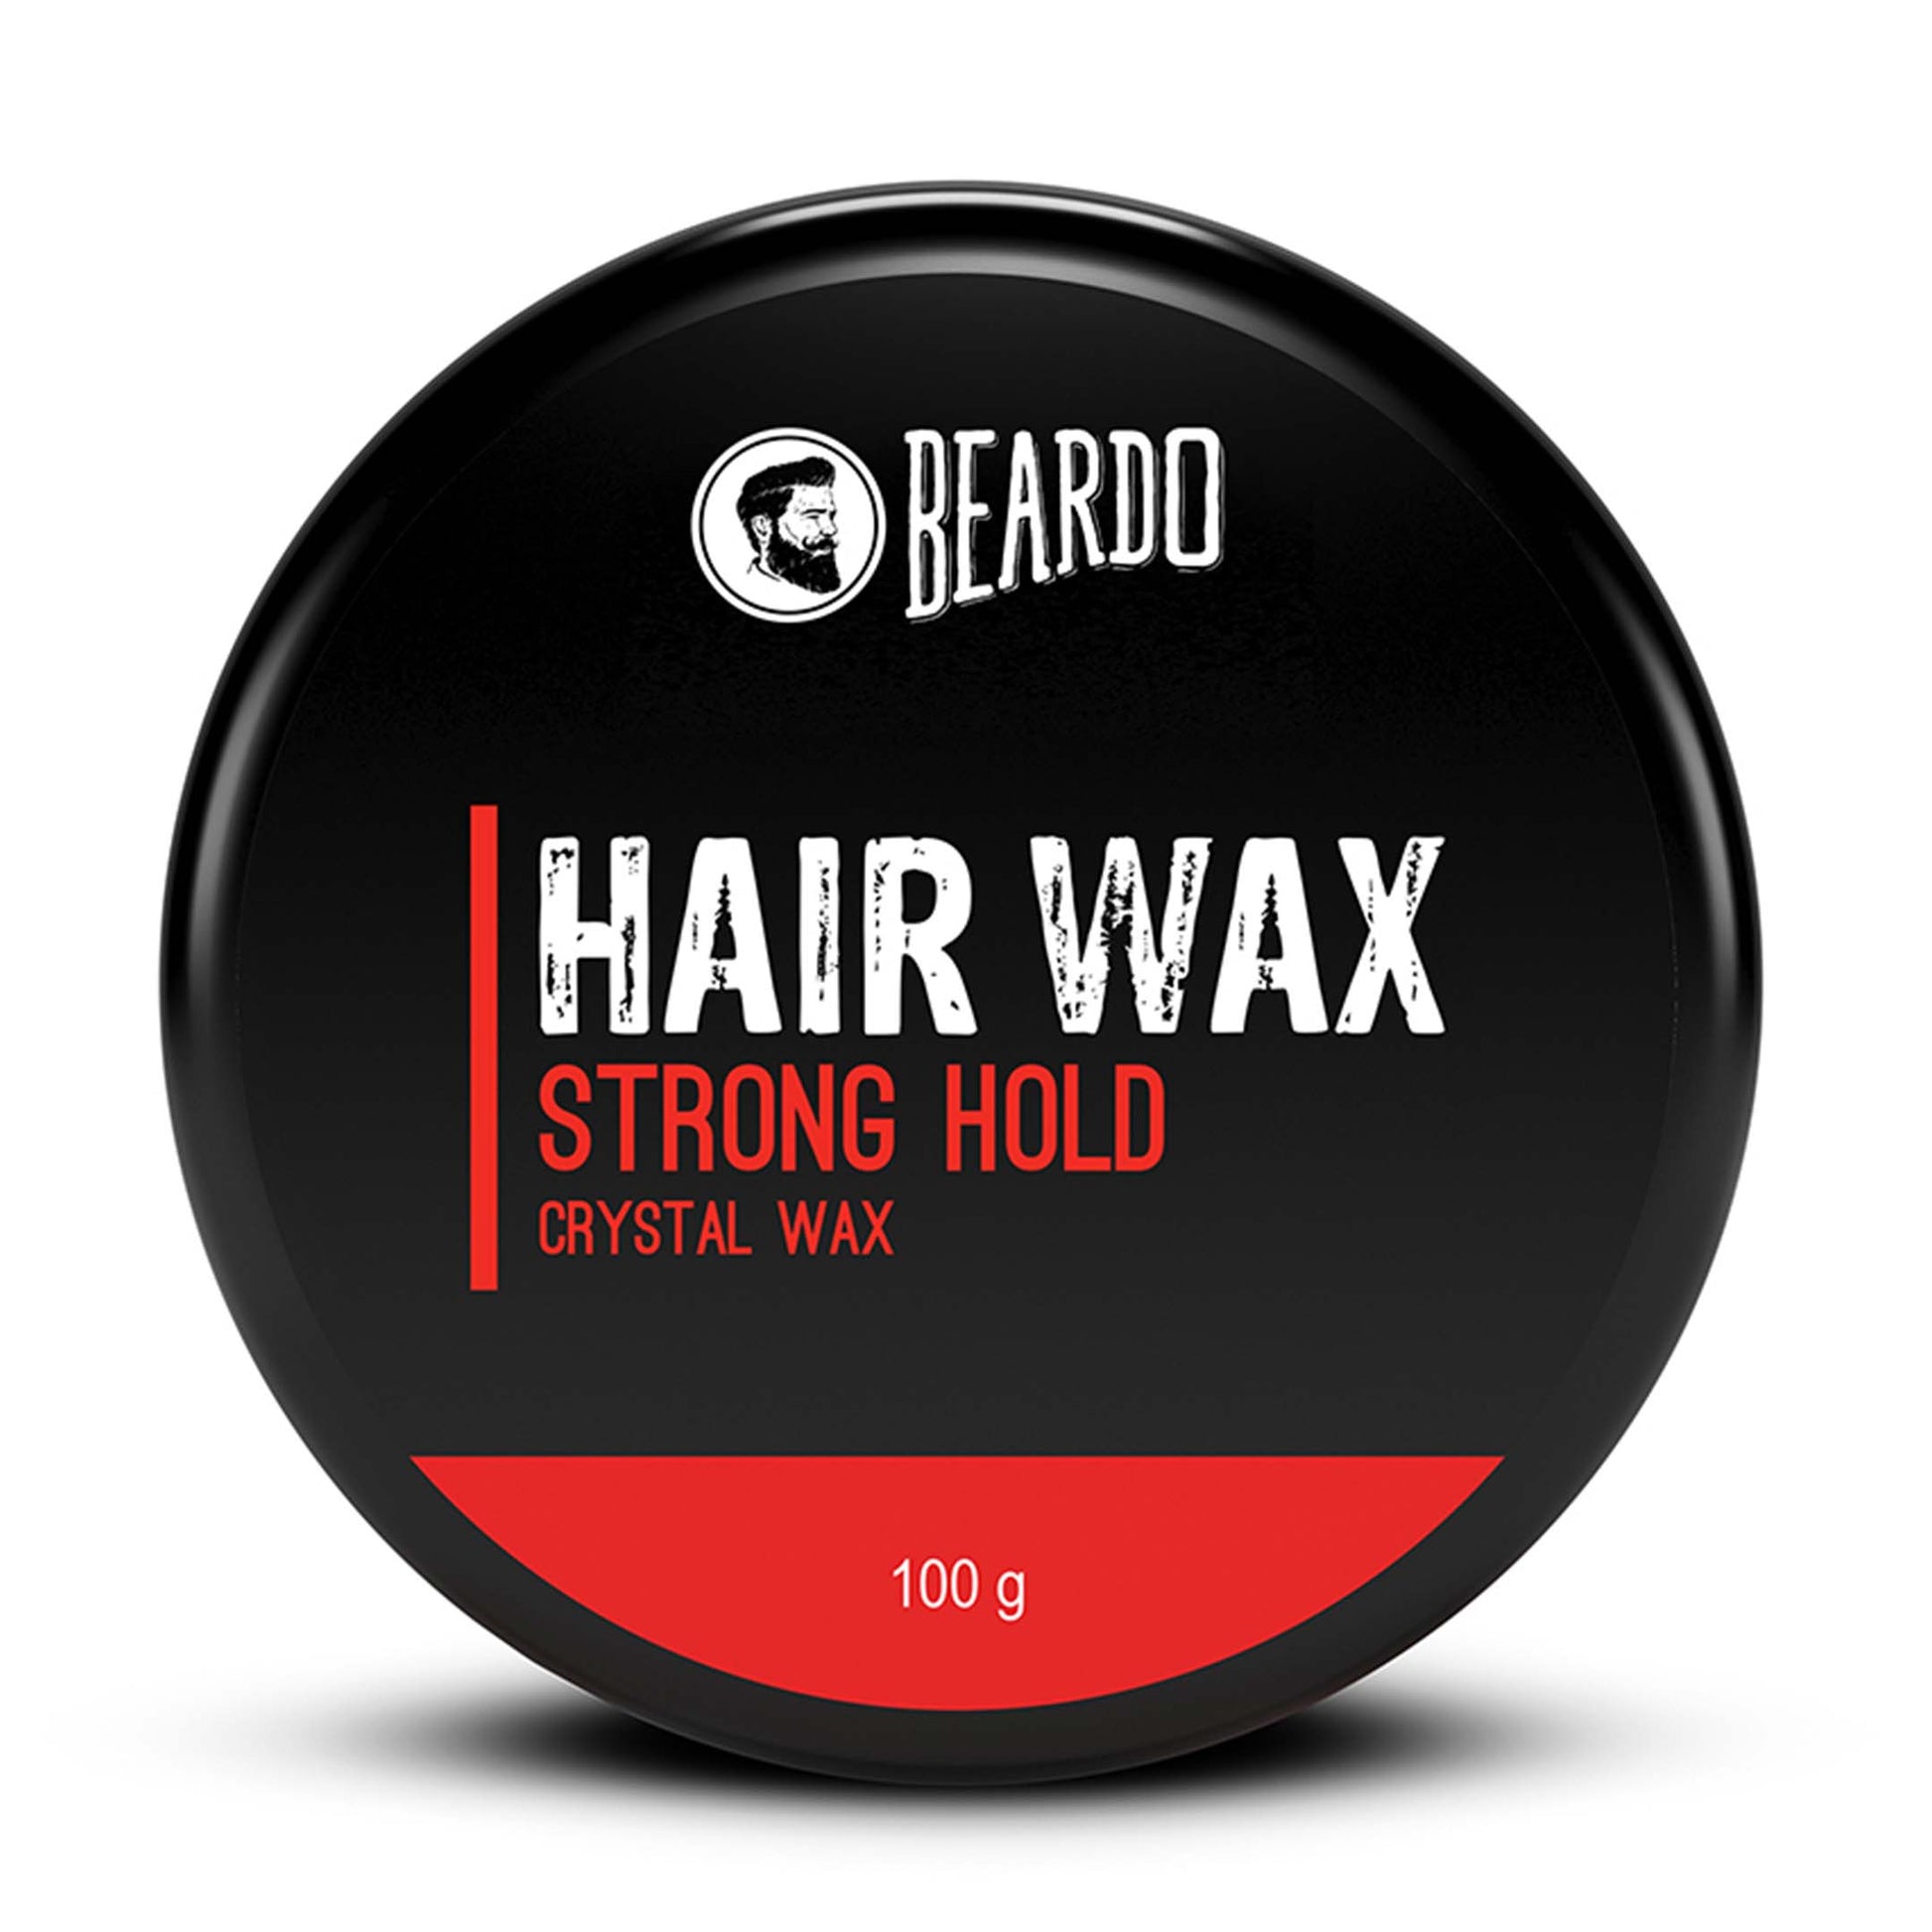 hair wax strong hold, strong hold hair wax, beardo hair wax, hair wax for hair style